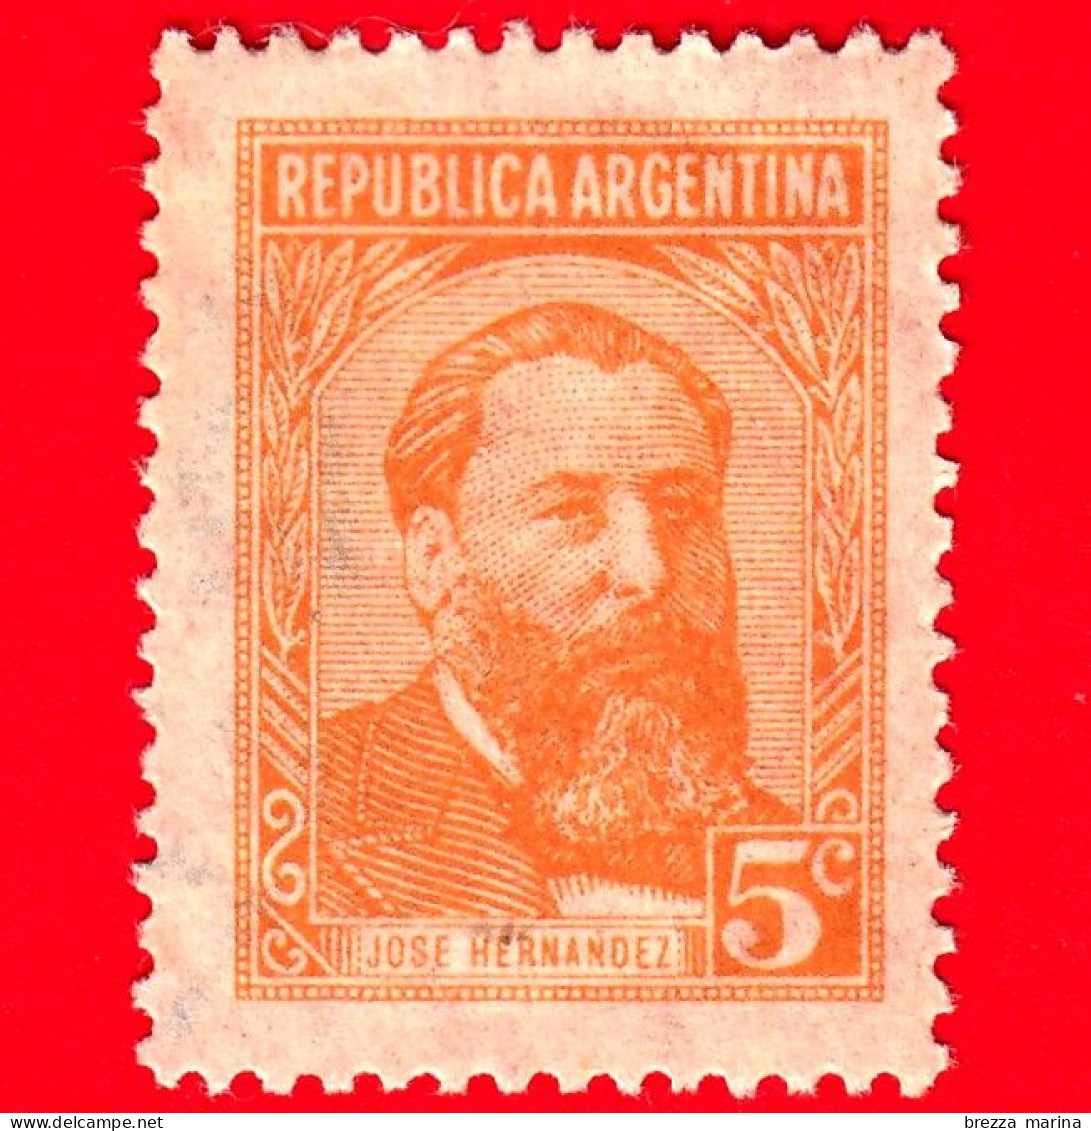 ARGENTINA - Usato - 1957 - José Hernandez (1834-1886), Poeta - 5 - Used Stamps